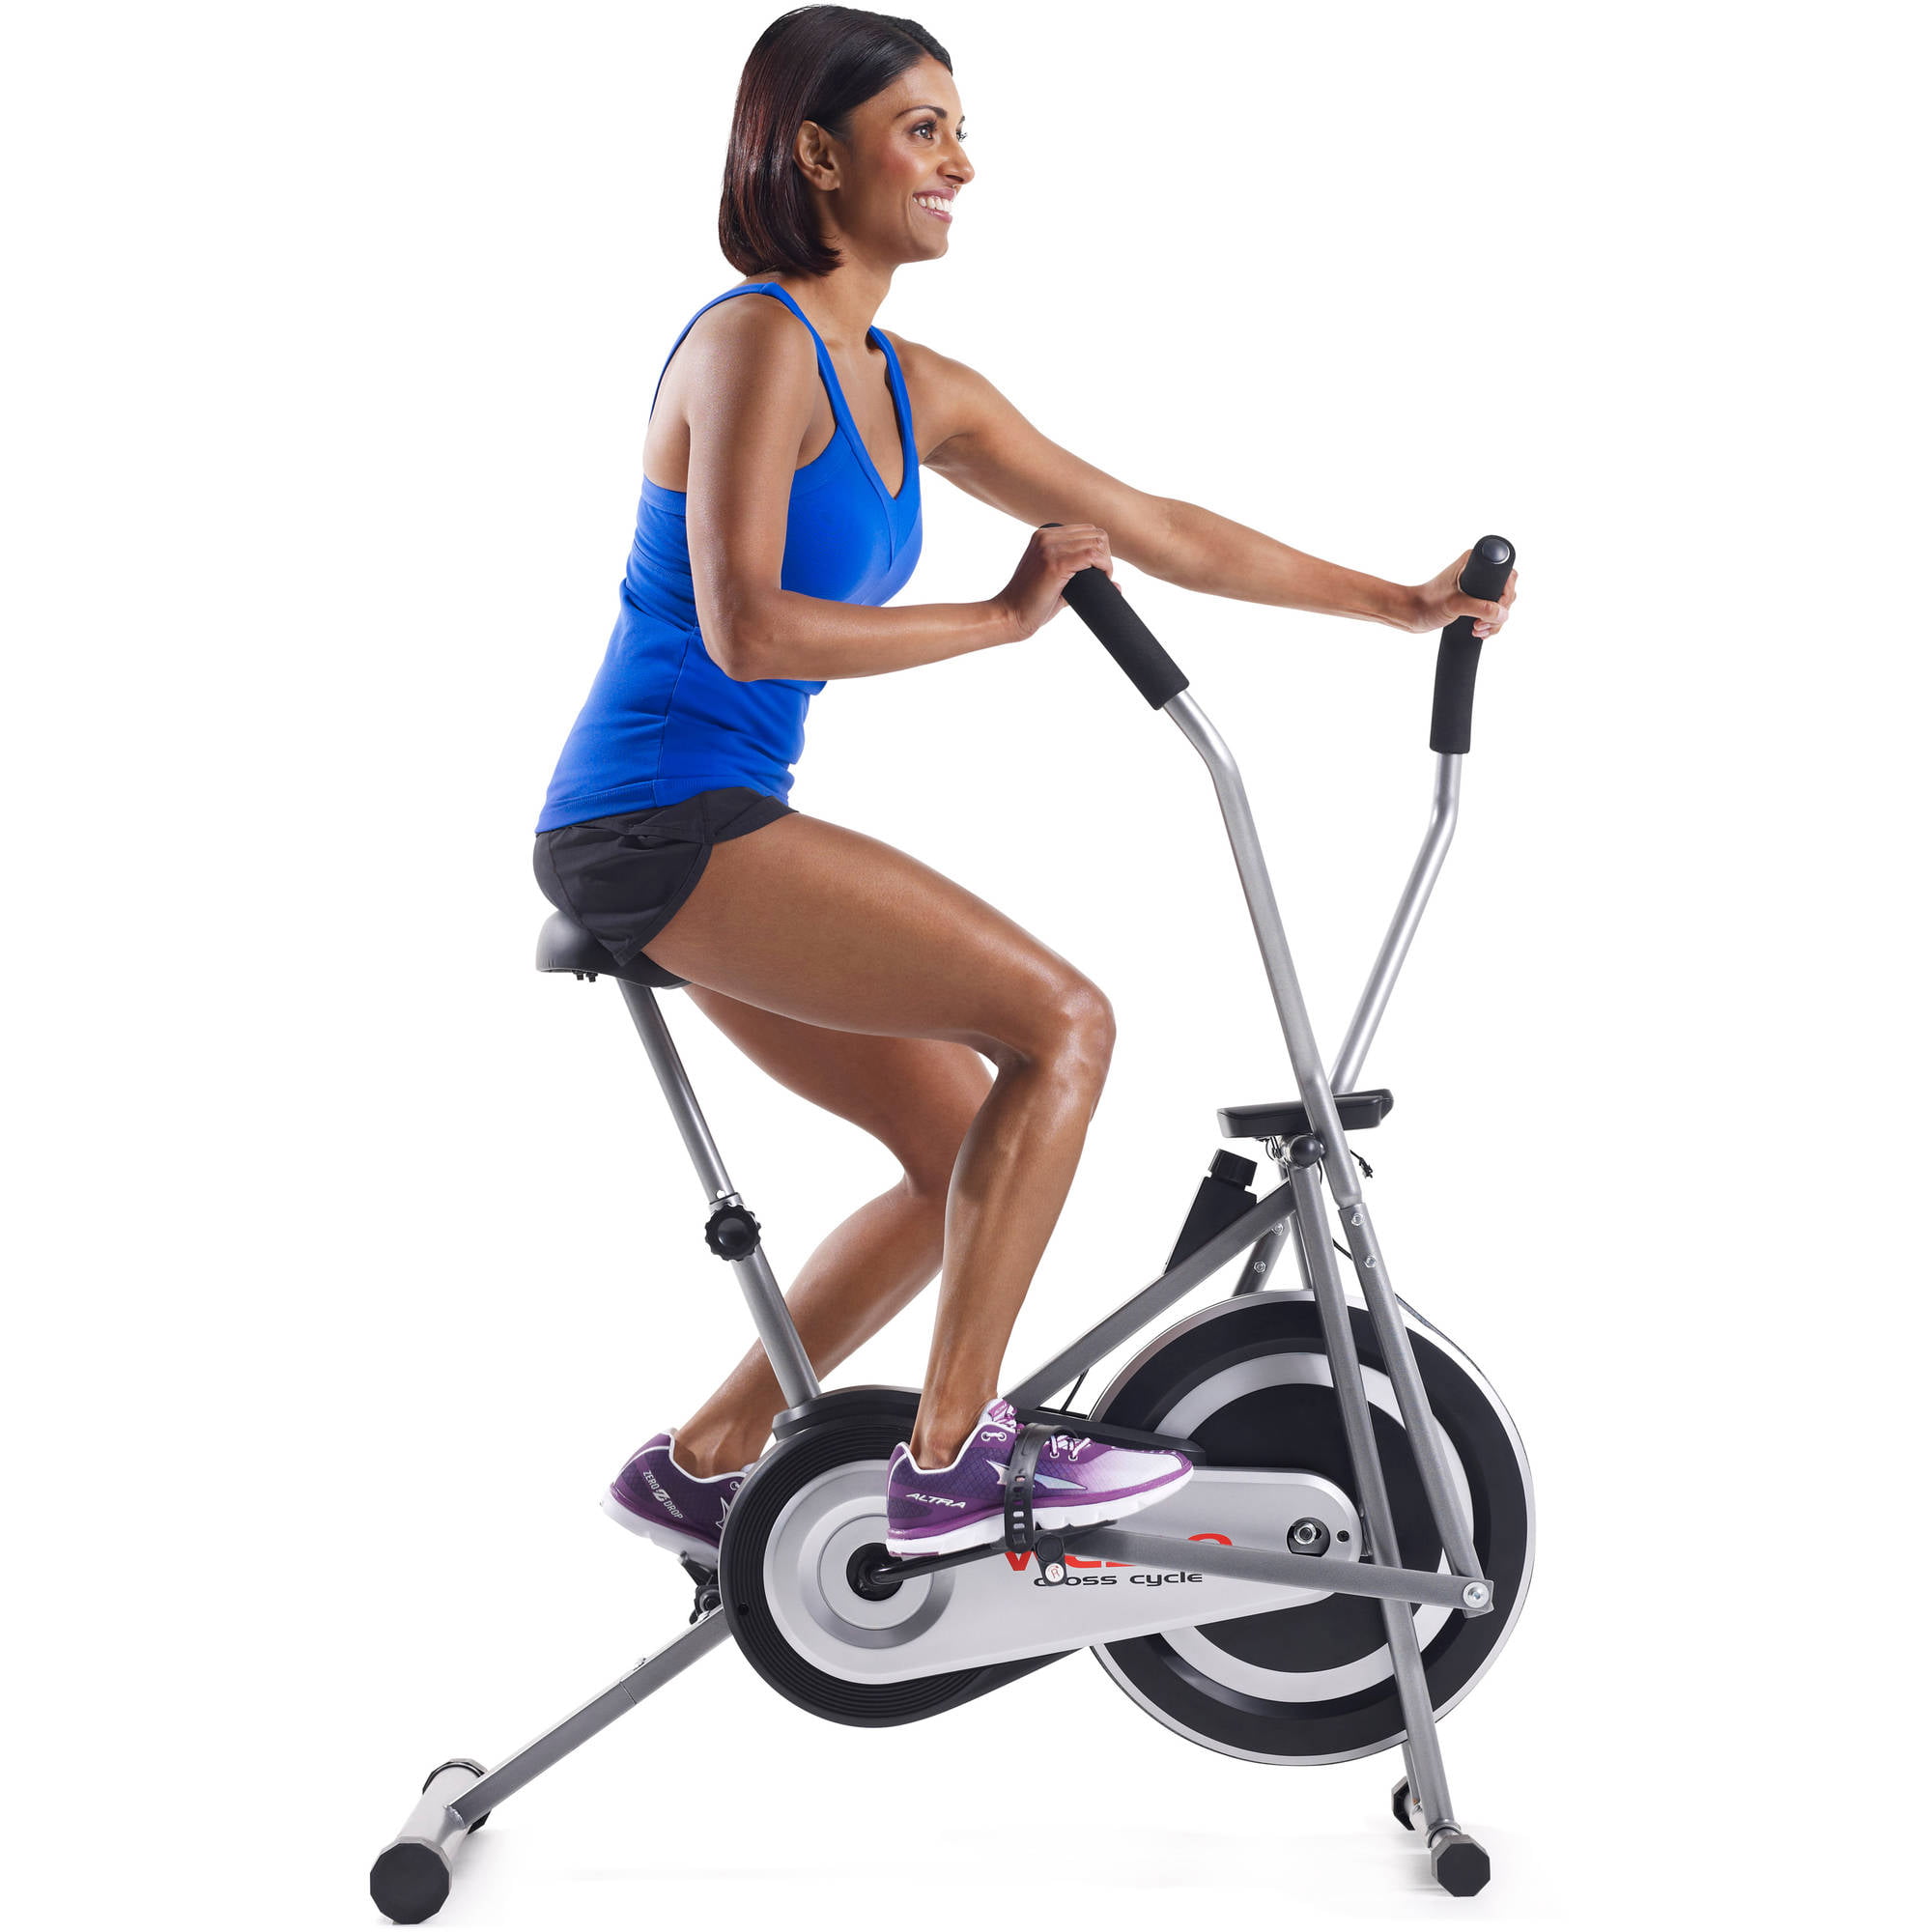 Weslo Cross Cycle Upright Exercise Bike Walmart with Arm Cycling Machine Benefits